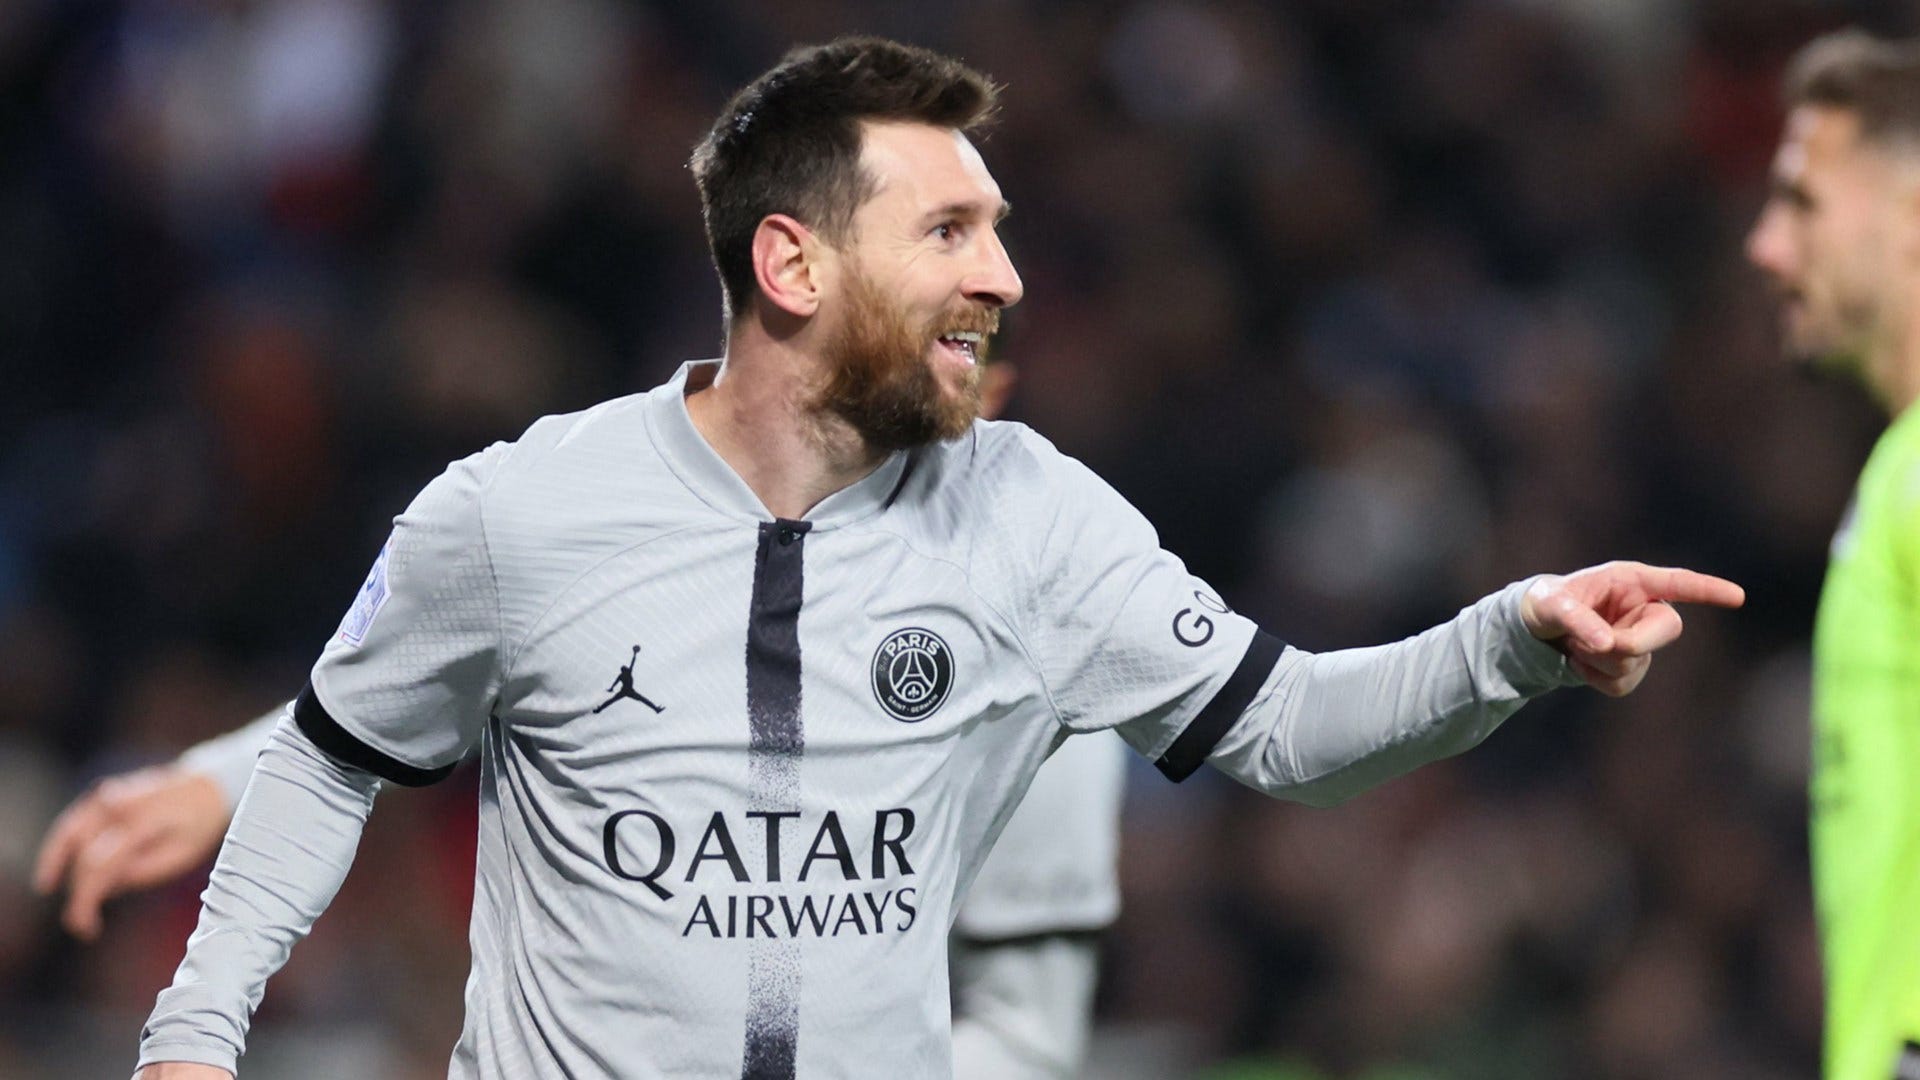 PSG muss wegen Financial Fairplay wohl Gehälter kürzen - auch Lionel Messi betroffen